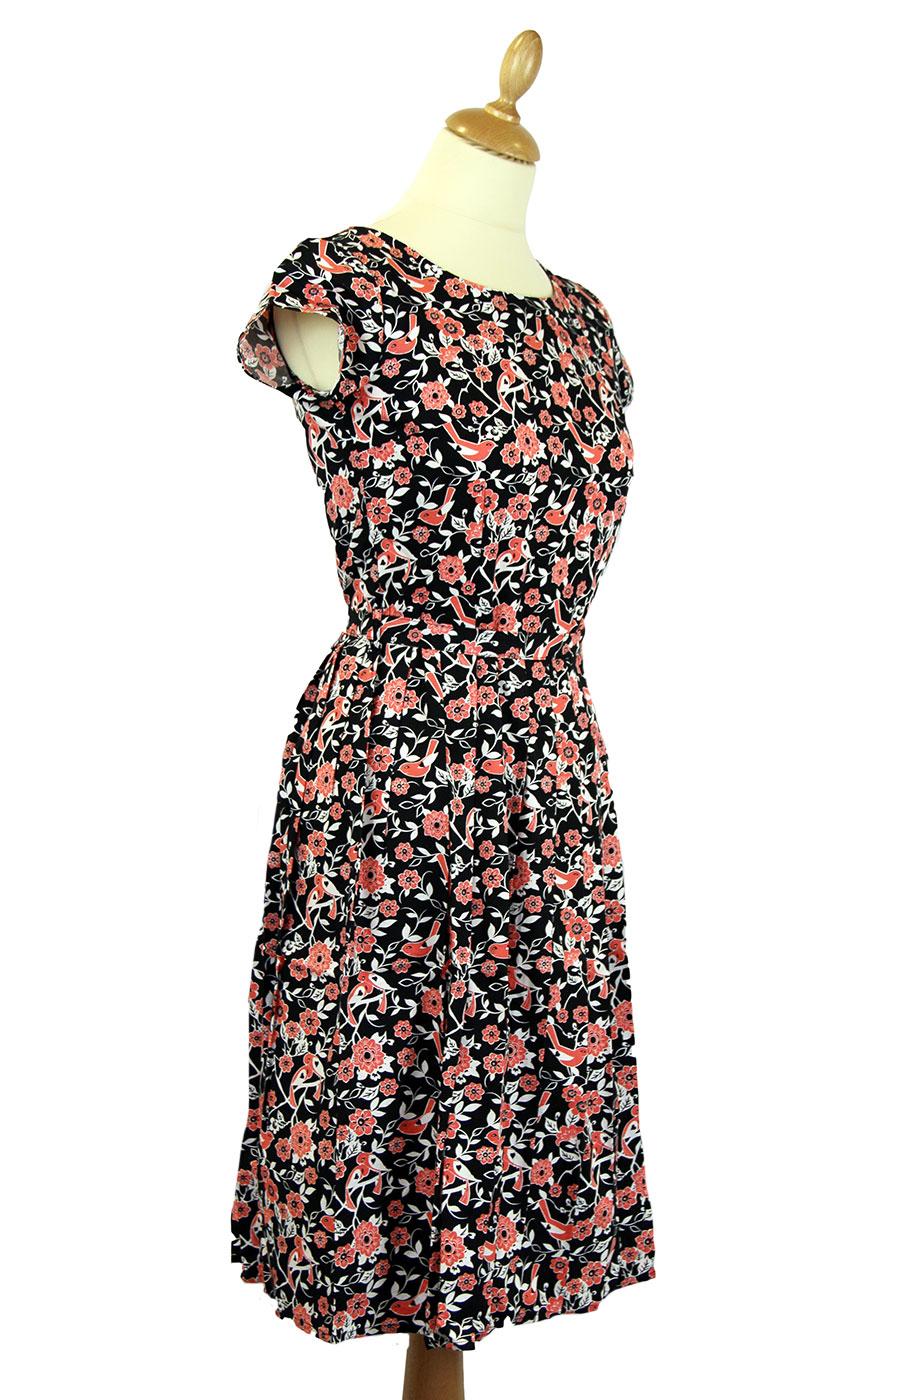 Love Birds Retro 1950s Vintage Summer Tea Dress in Black/Pink